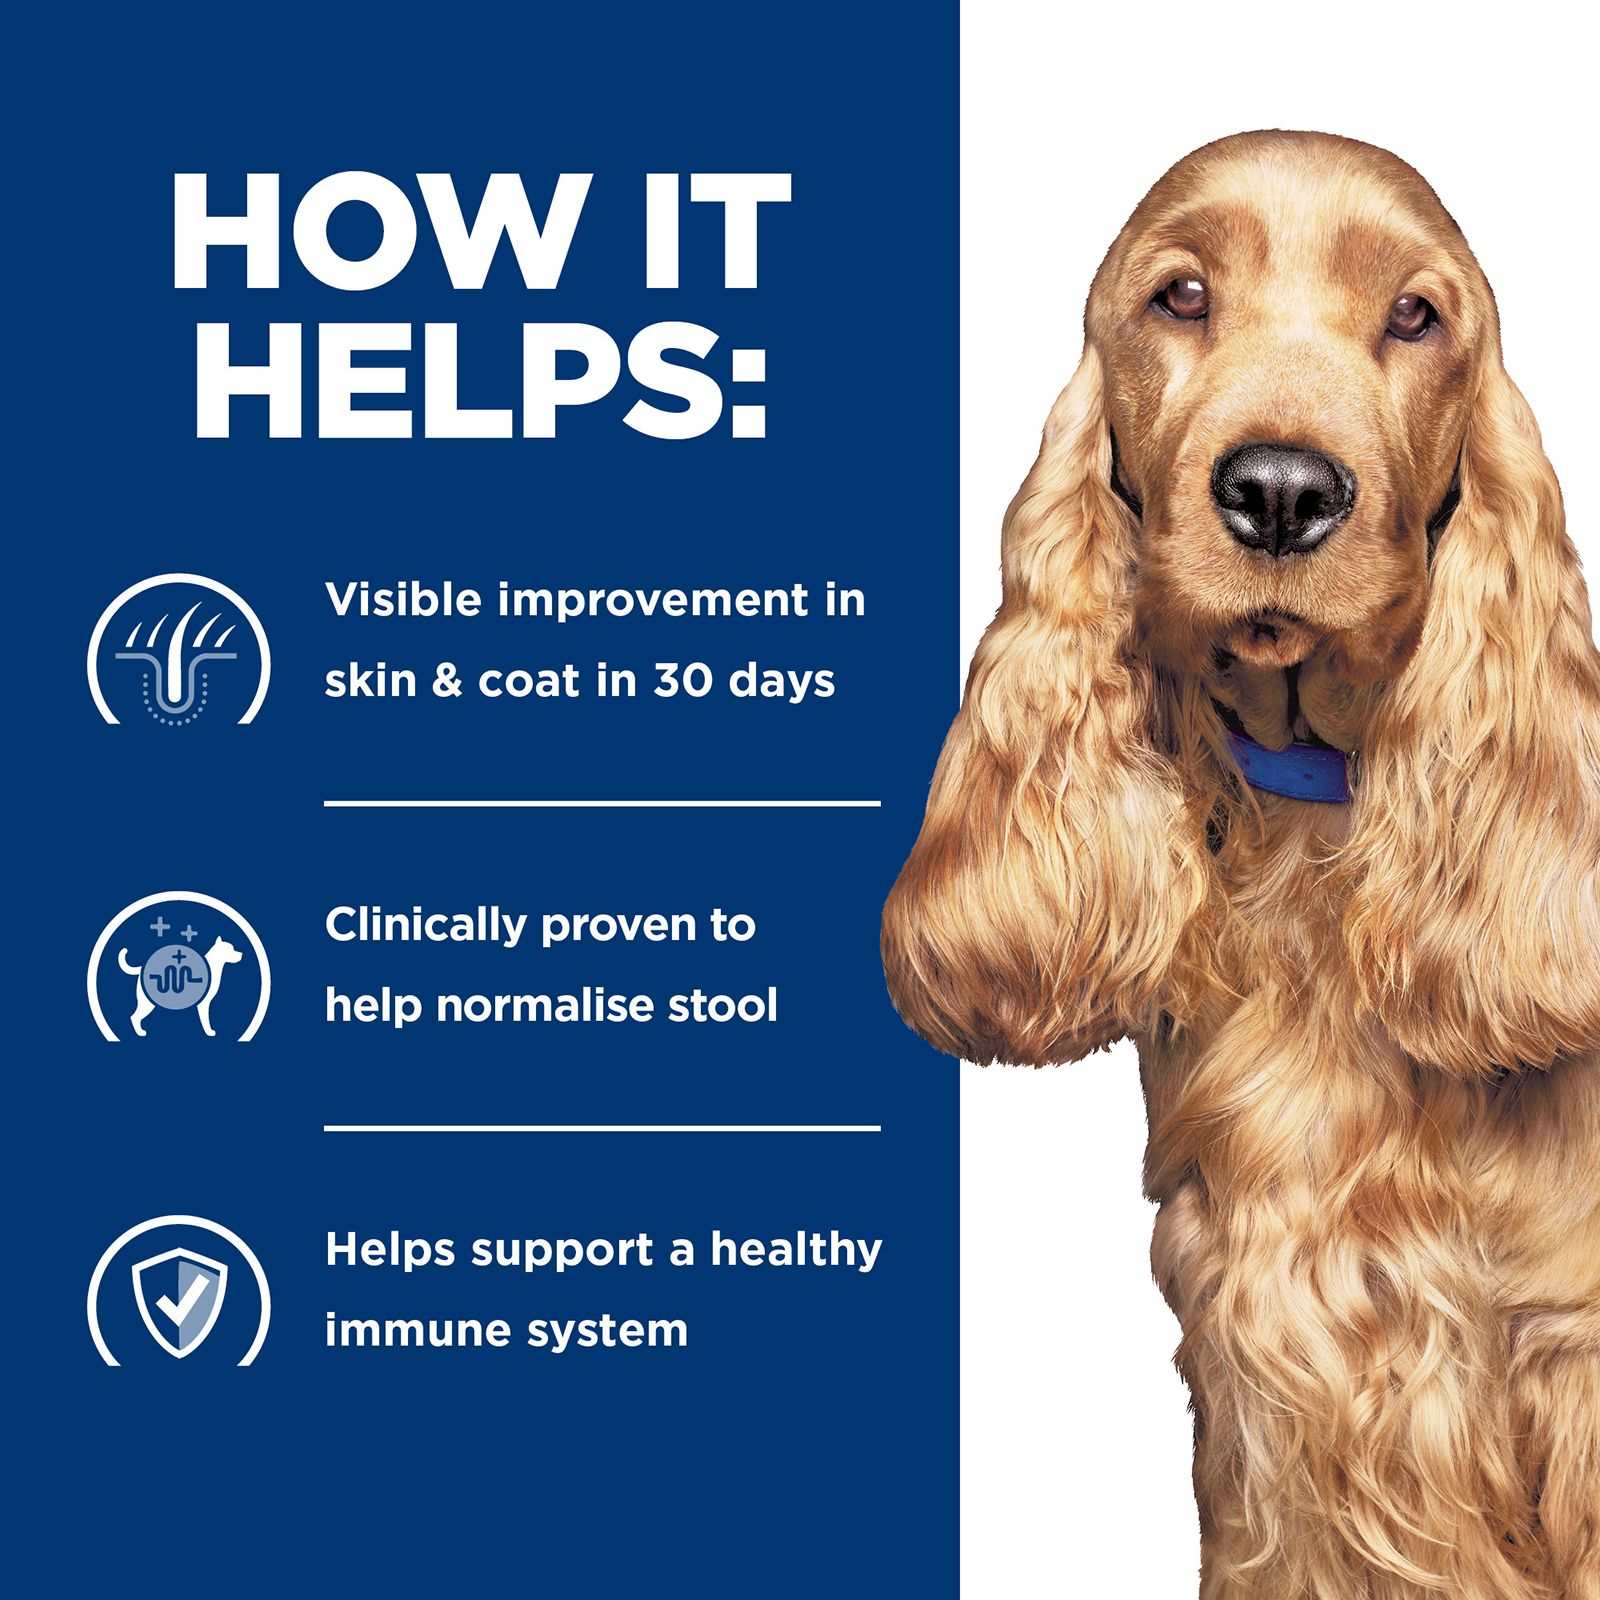 Hill's Prescription Diet Dog Food Can z/d Skin/Food Sensitivities Canned Dog Food